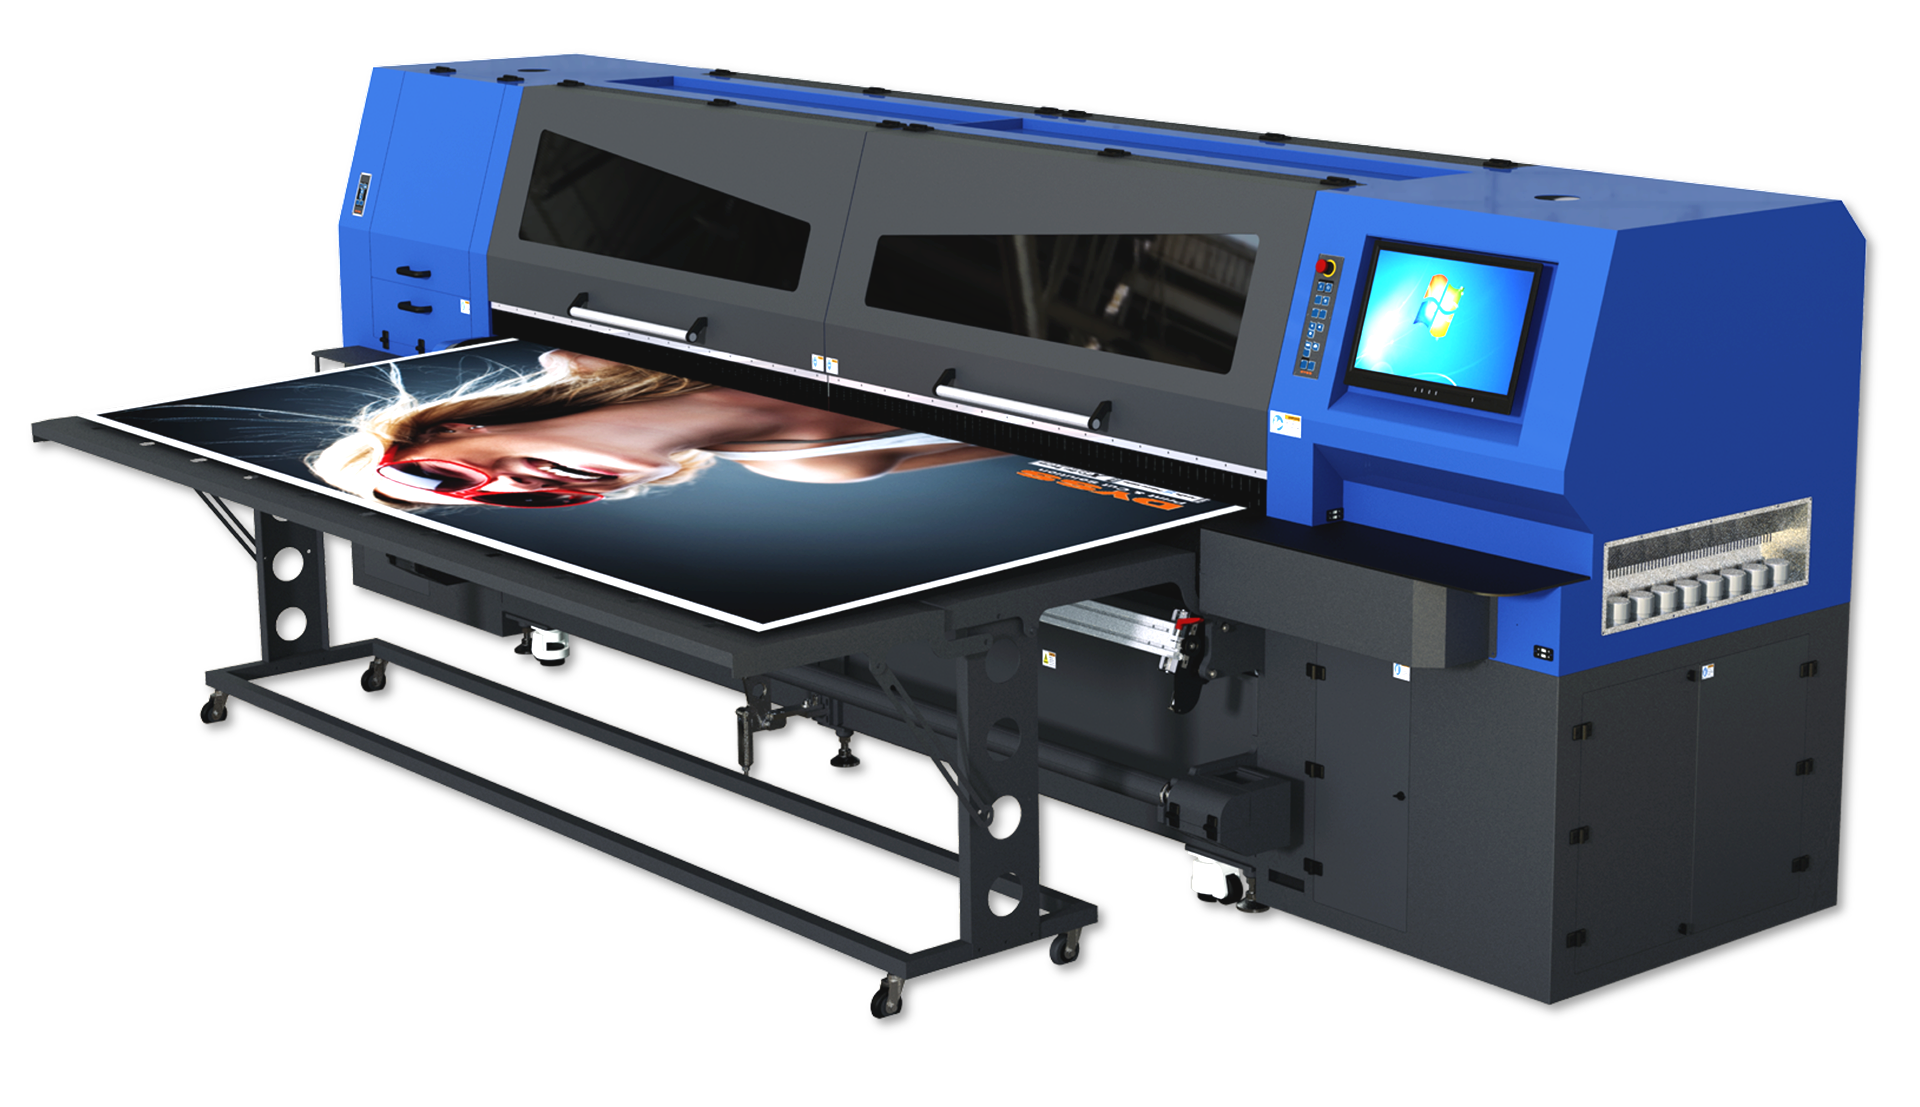 DYSS Digital UV Hybrid Printer, Apllo Printer, GH Series, 대영시스템 UV 하이브리드 프린터 GH시리즈